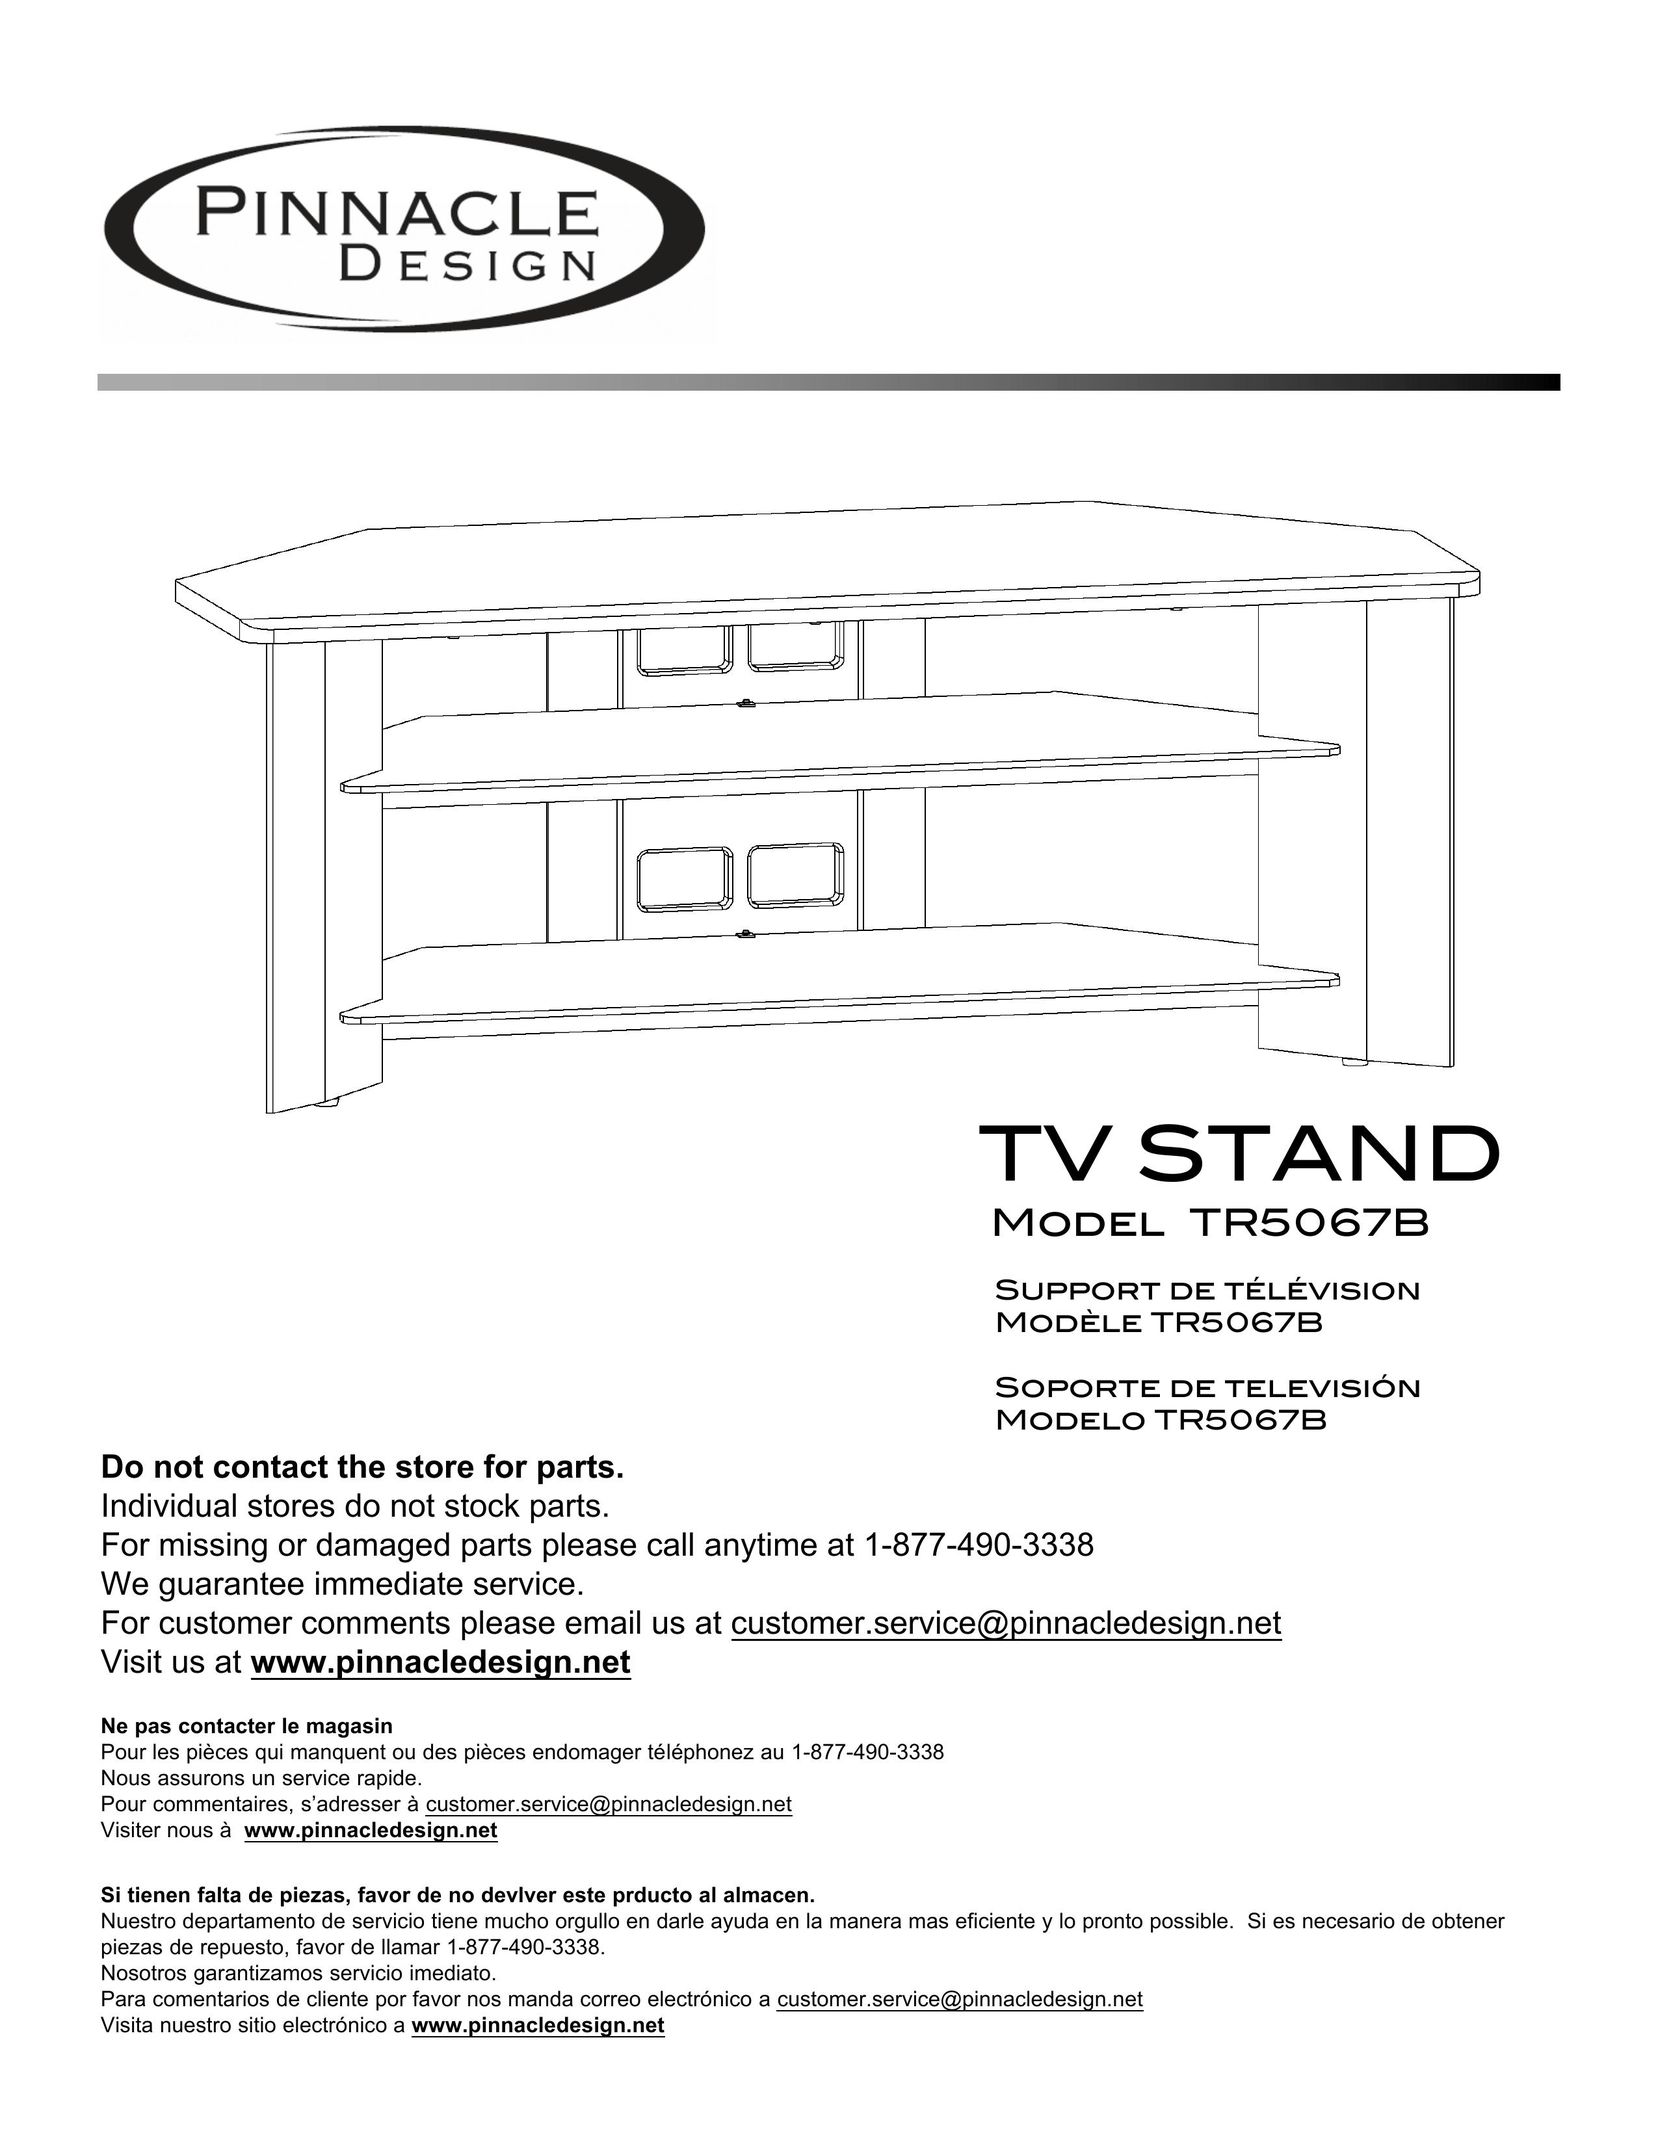 Pinnacle Design TR5067B TV Video Accessories User Manual